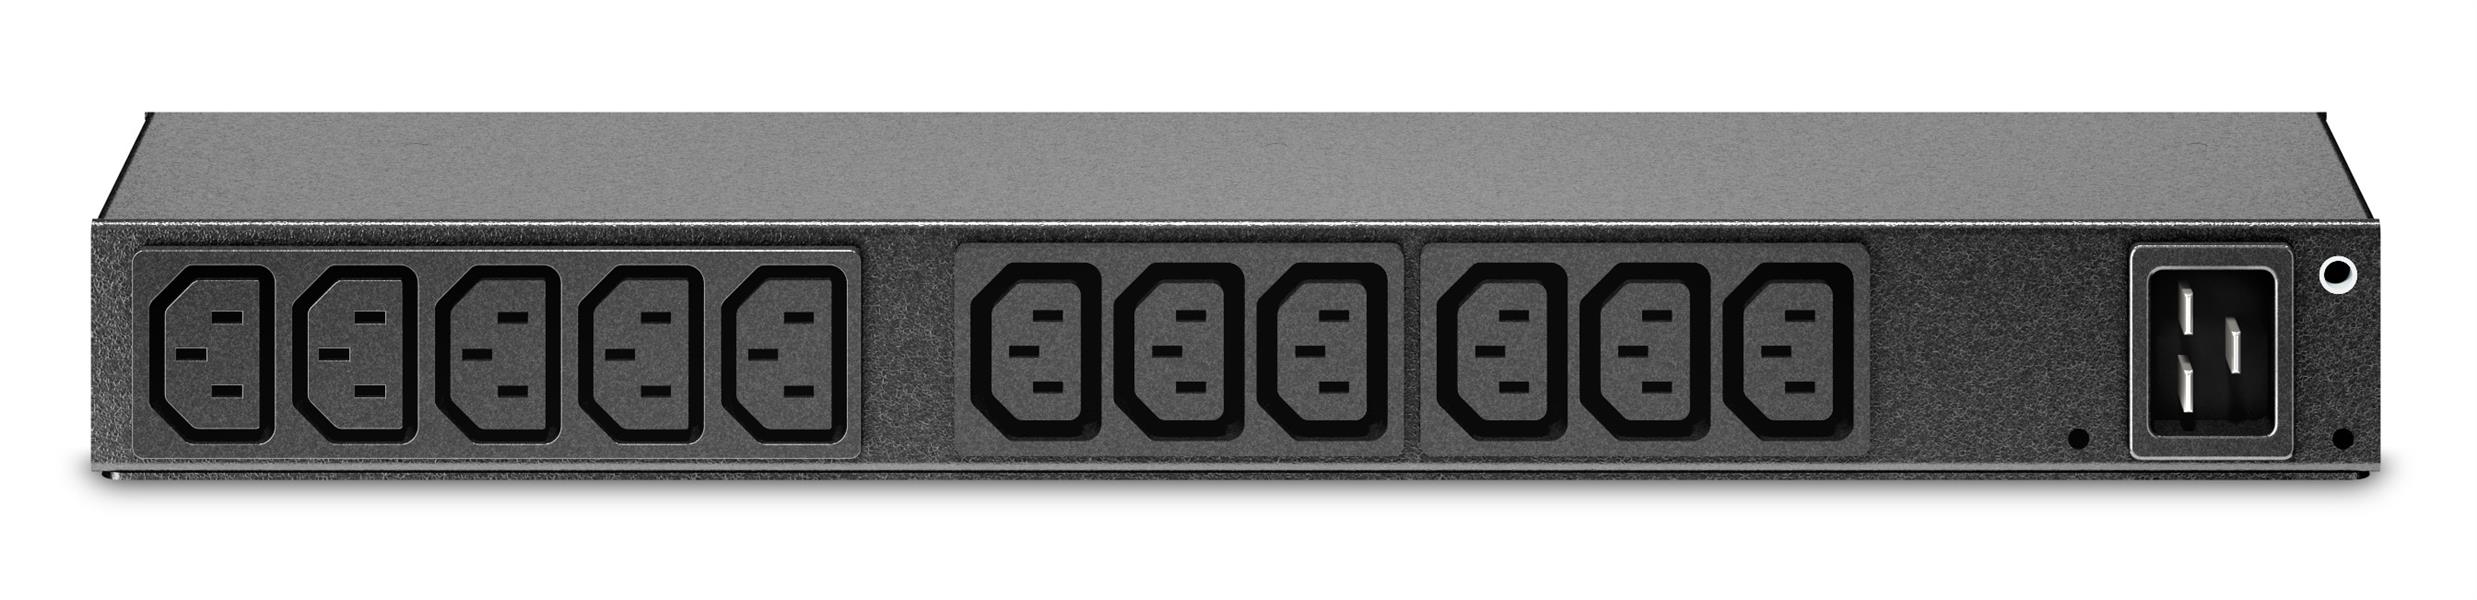 APC Rack PDU, Basic, 0U/1U, 16A, 230V, (13x) C13